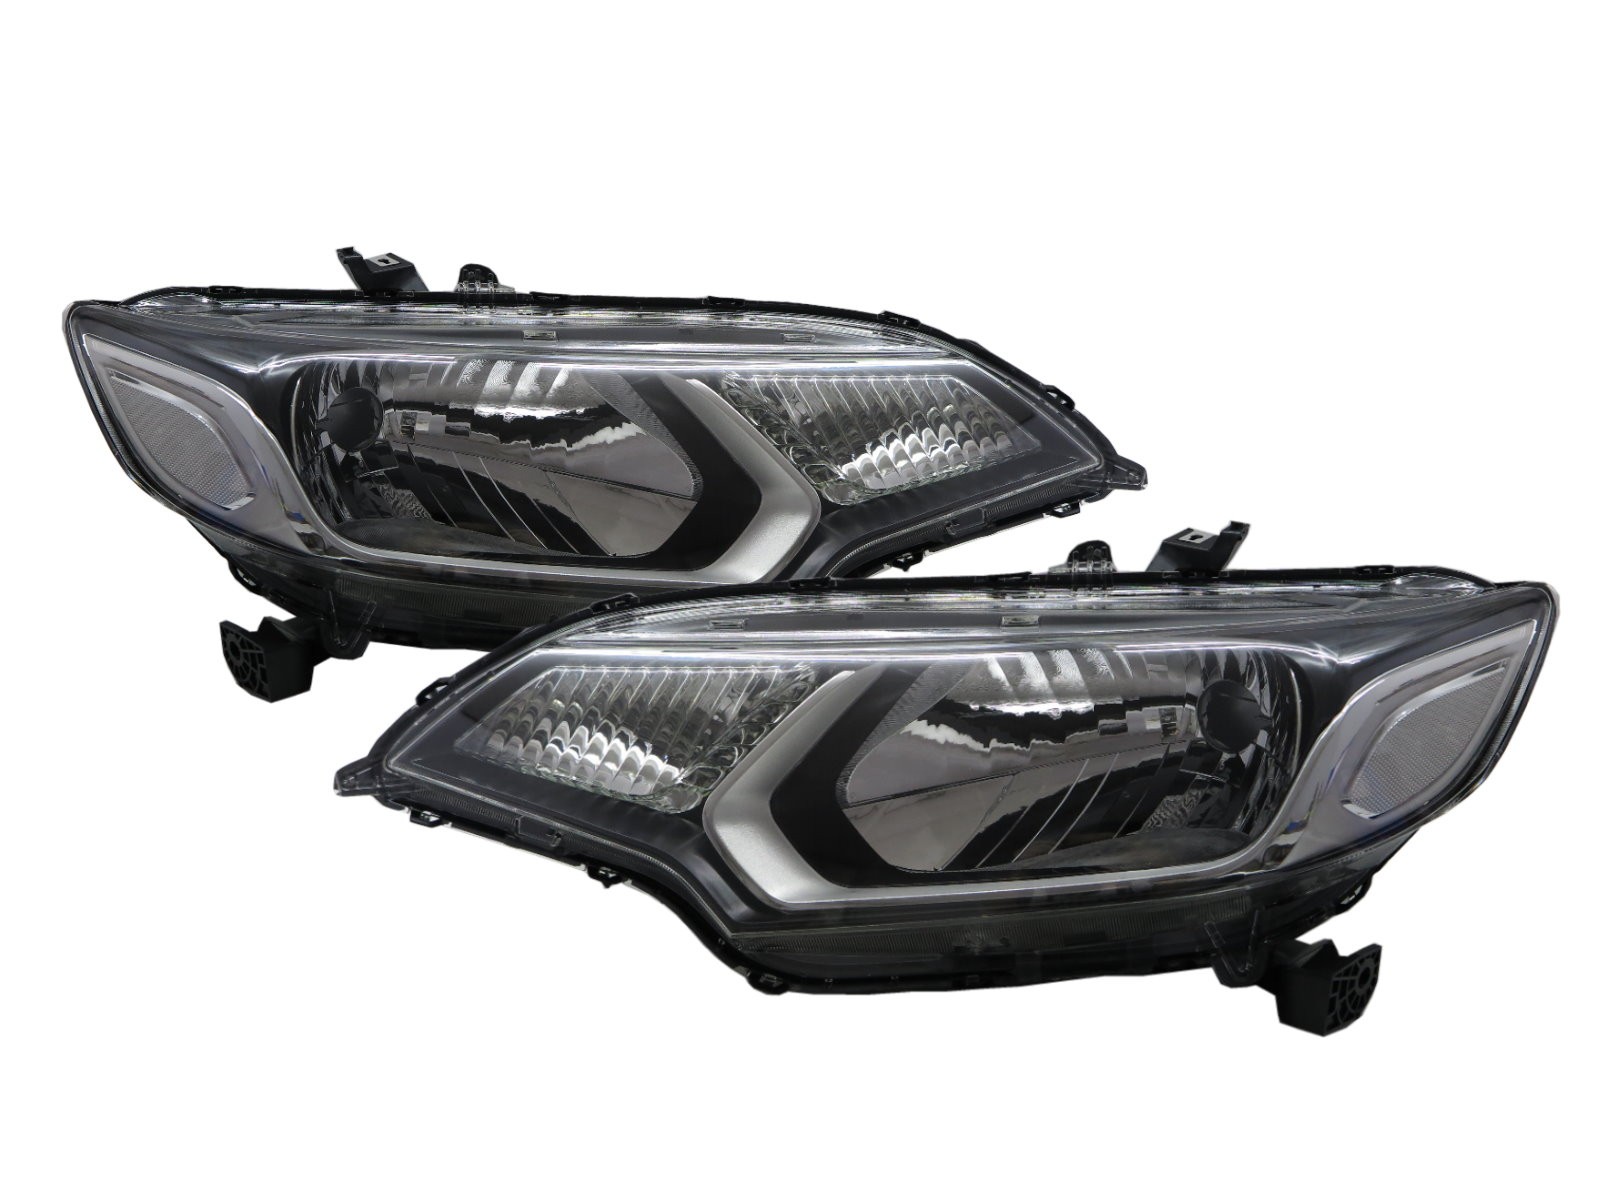 CrazyTheGod FIT/JAZZ Third generation 2013-present Hatchback 5D Clear Headlight Headlamp EU Black for HONDA LHD